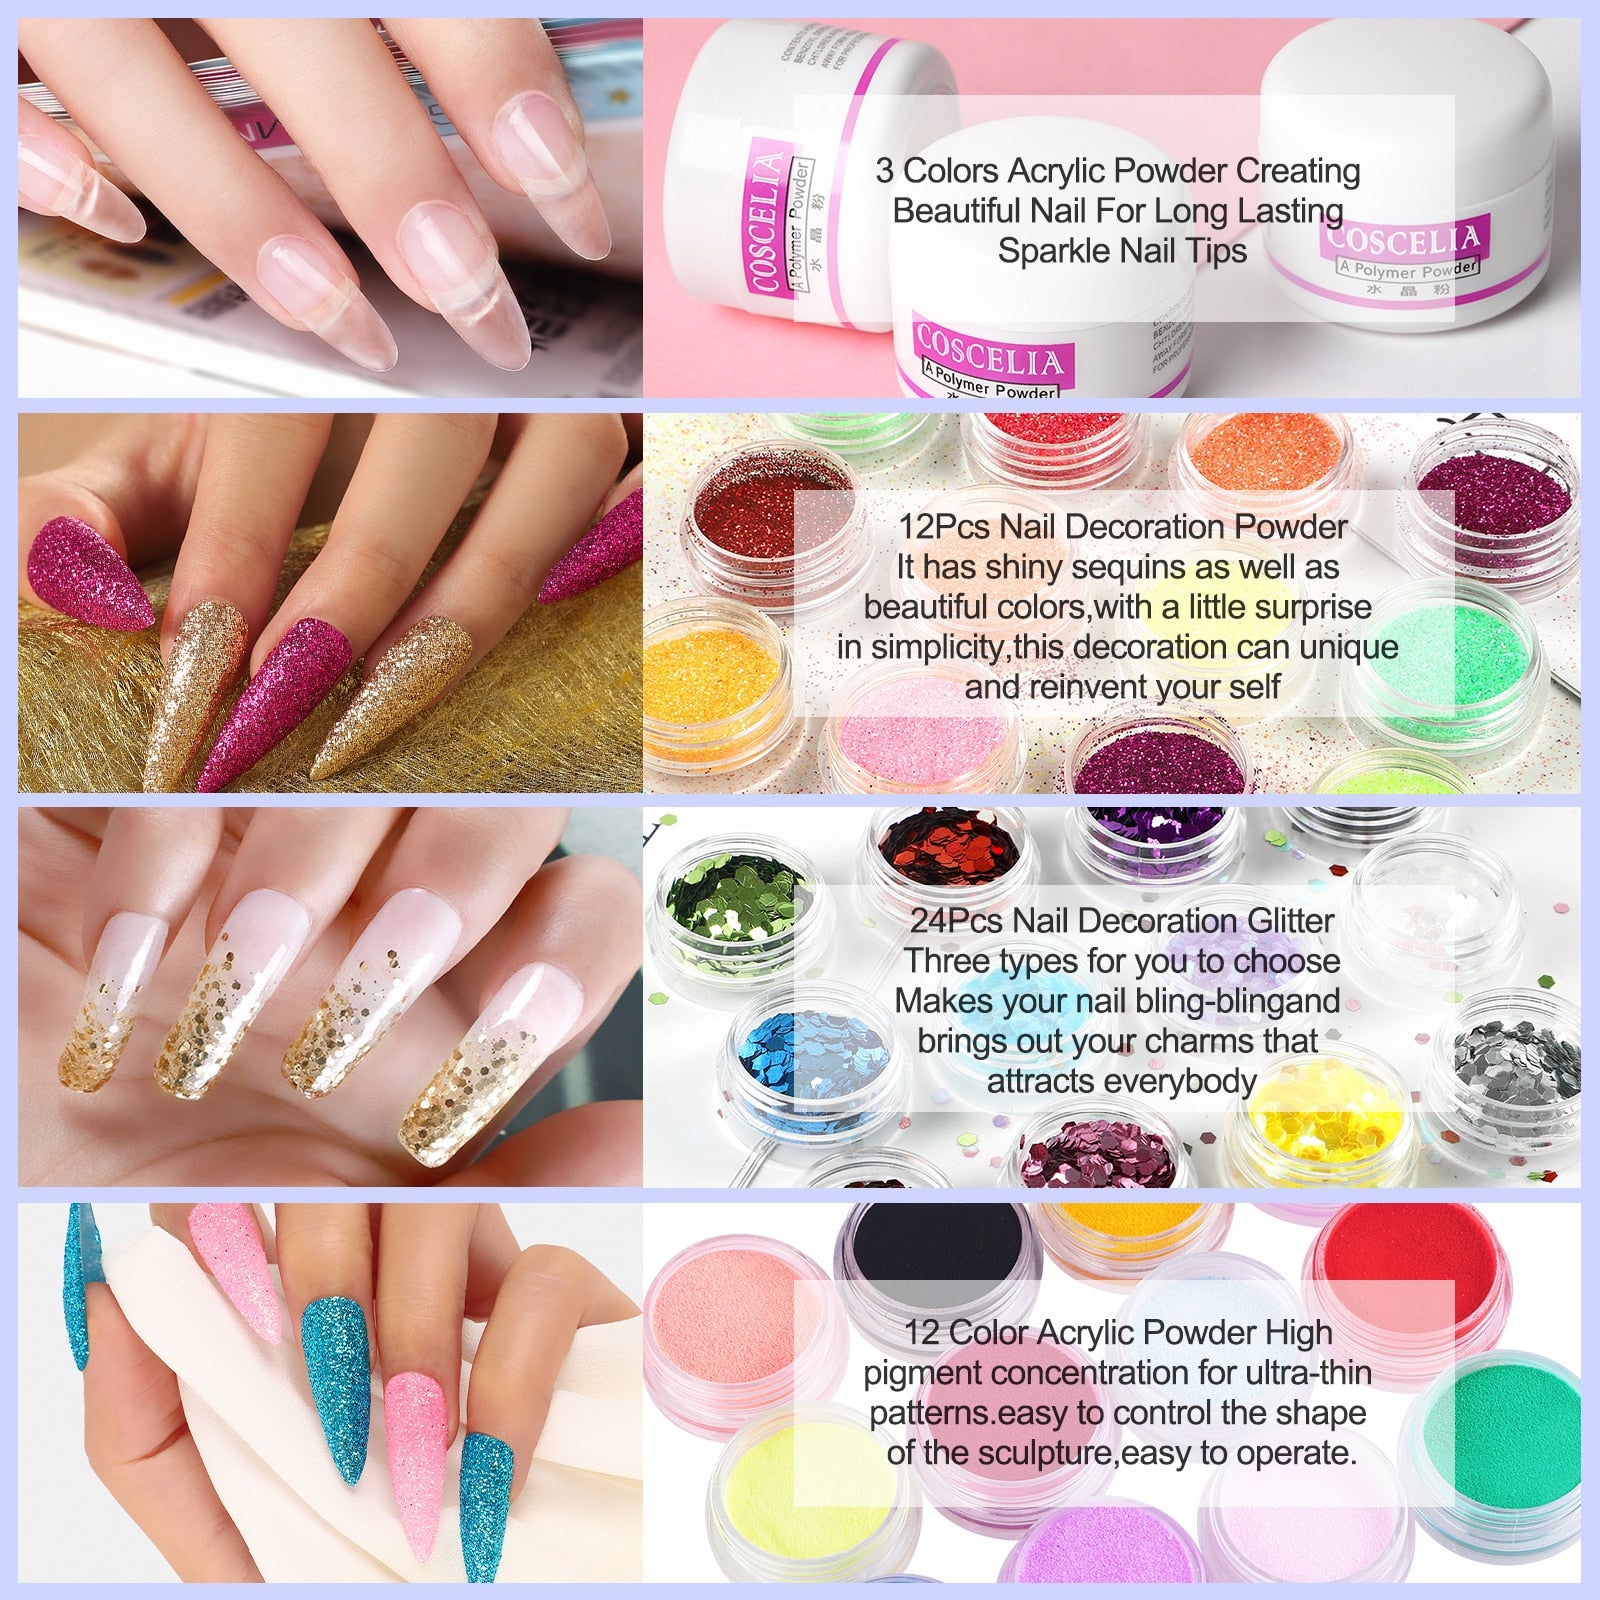 COSCELIA Acrylic Nail Kit Professional Nail Supplies Set Crystal Powder Glitter Manicure Set Nail Art Acrylic Liquid Fake Nails